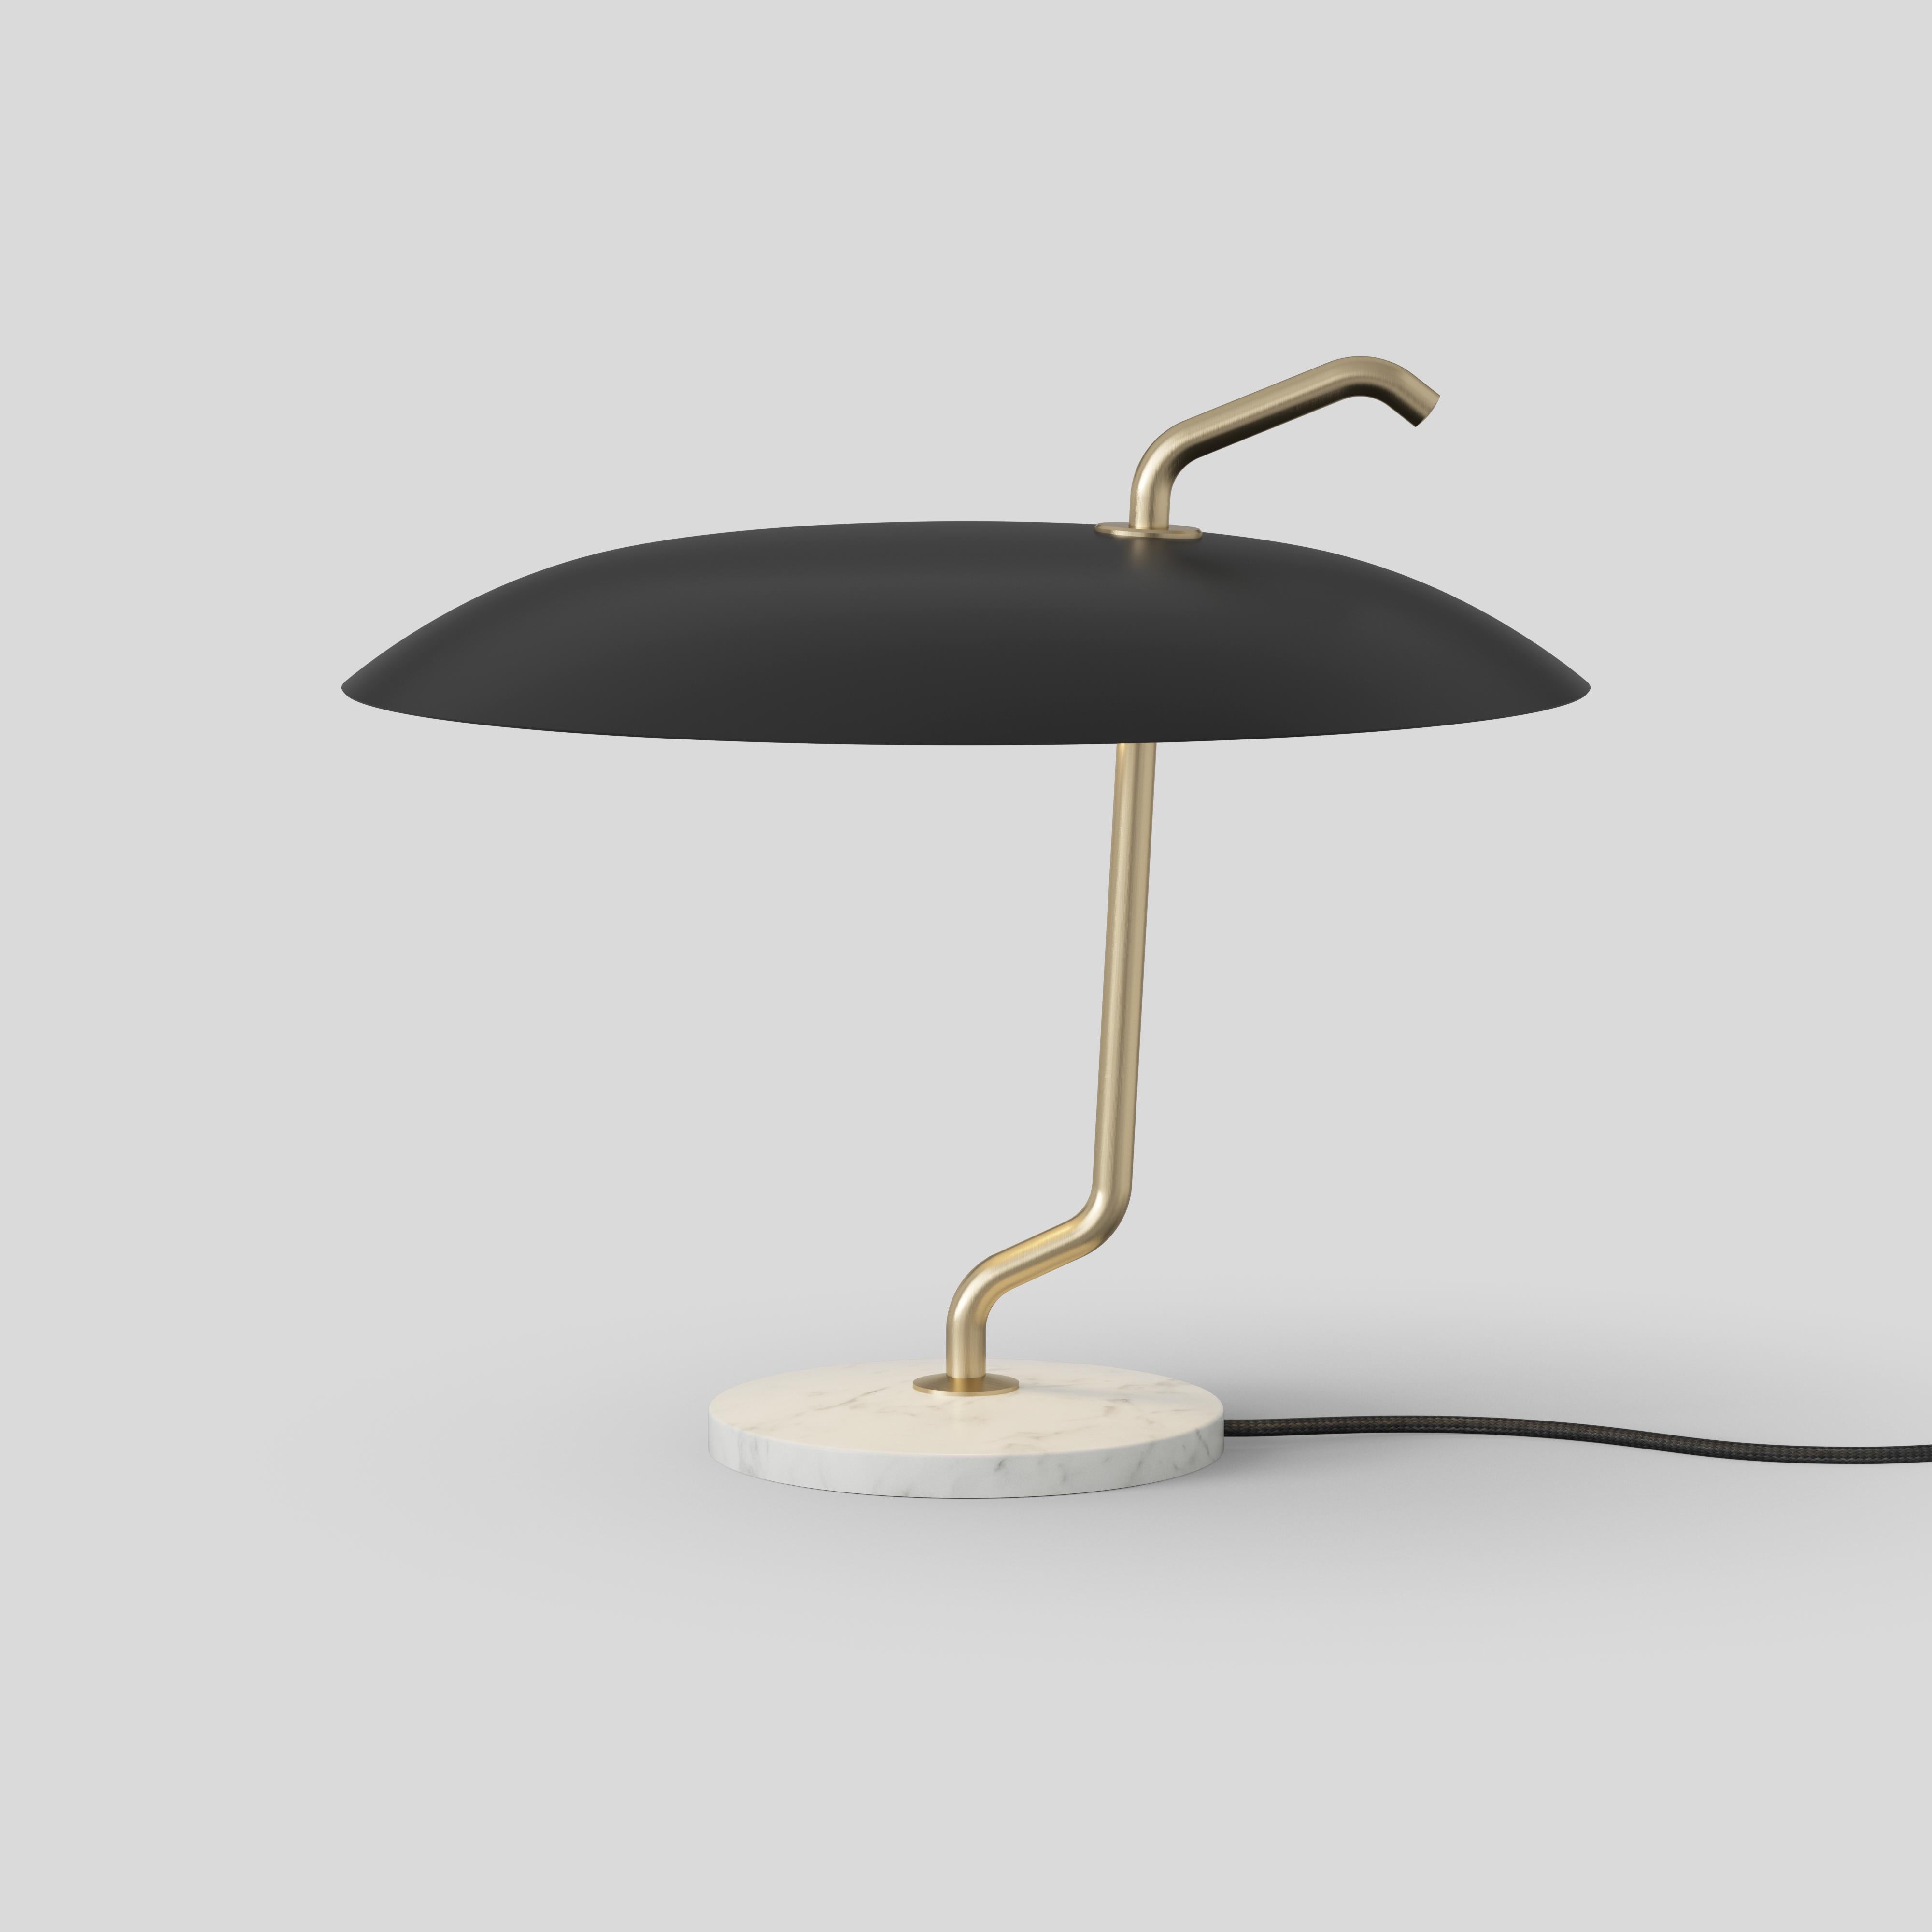 Gino Sarfatti Lamp Model 537 Brass Structure, Black Reflector by Astep 1